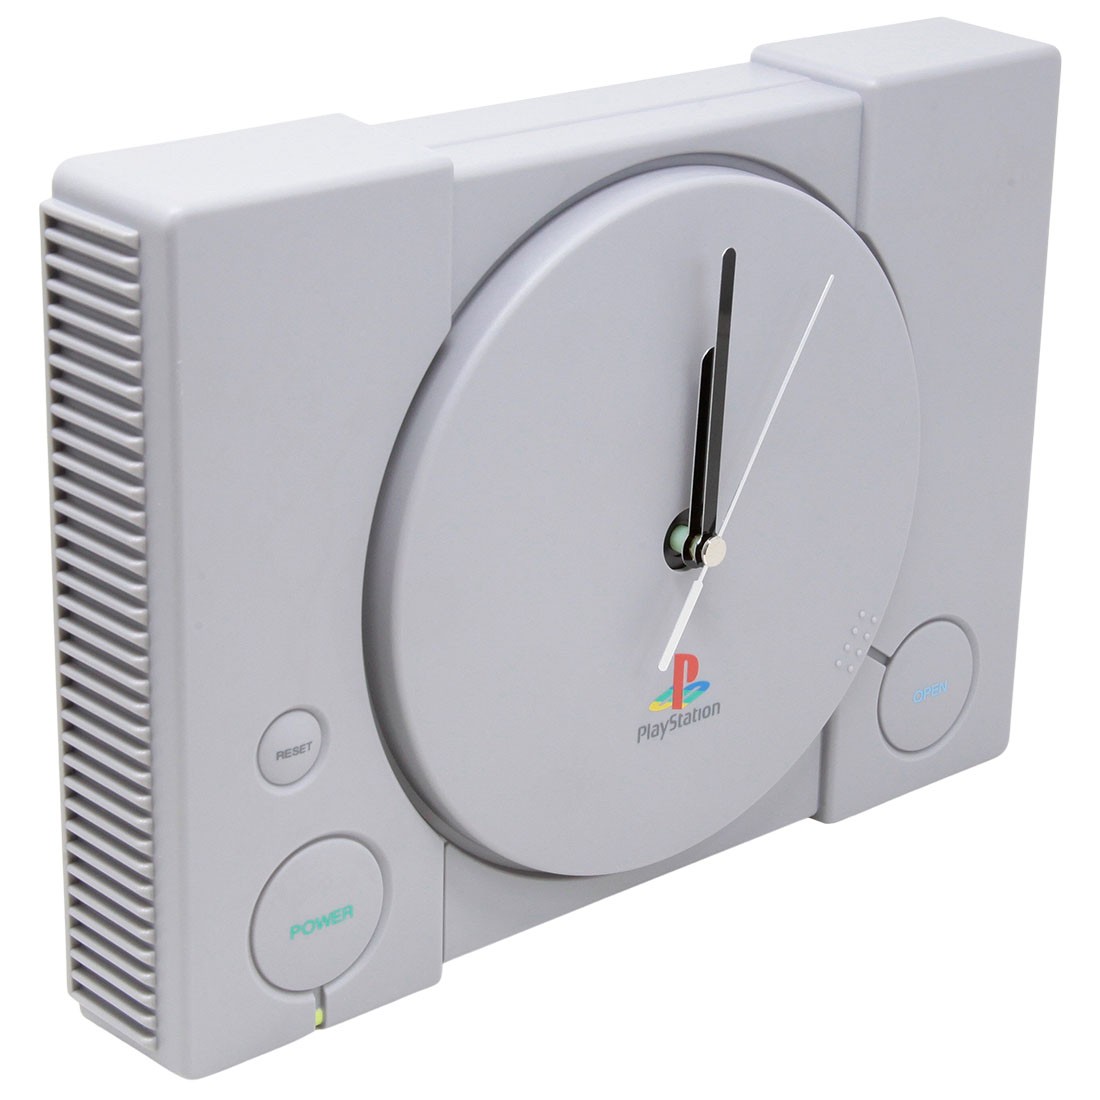 FuRyu PlayStation One Wall Clock (gray)